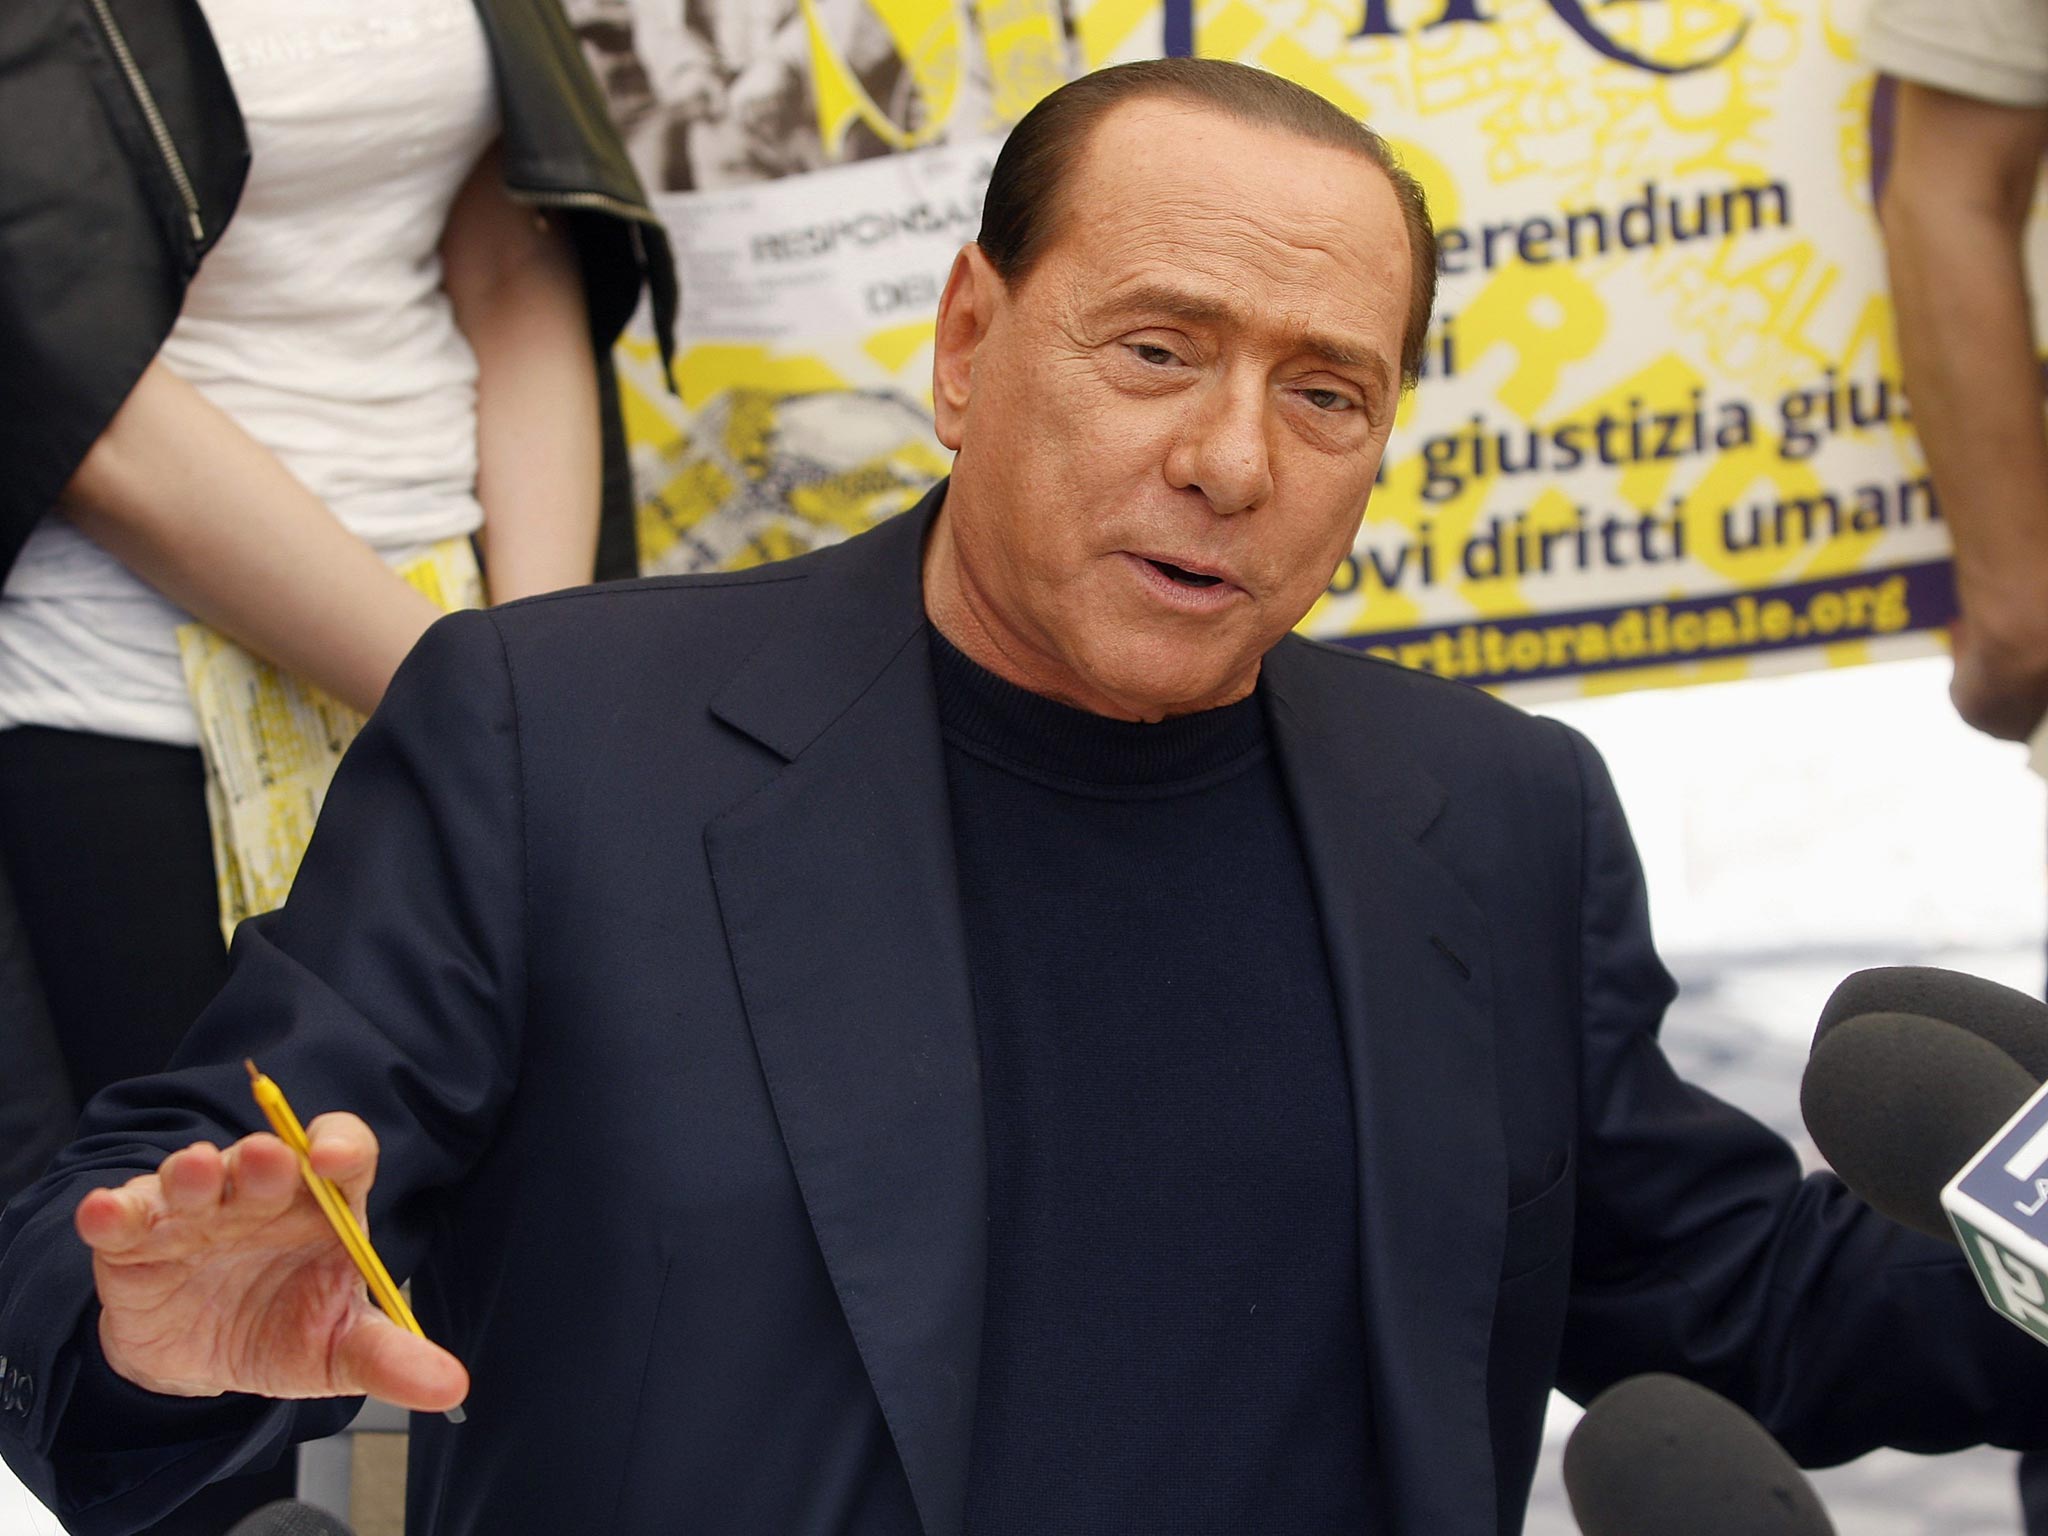 People of Liberty party (PDL) leader Silvio Berlusconi